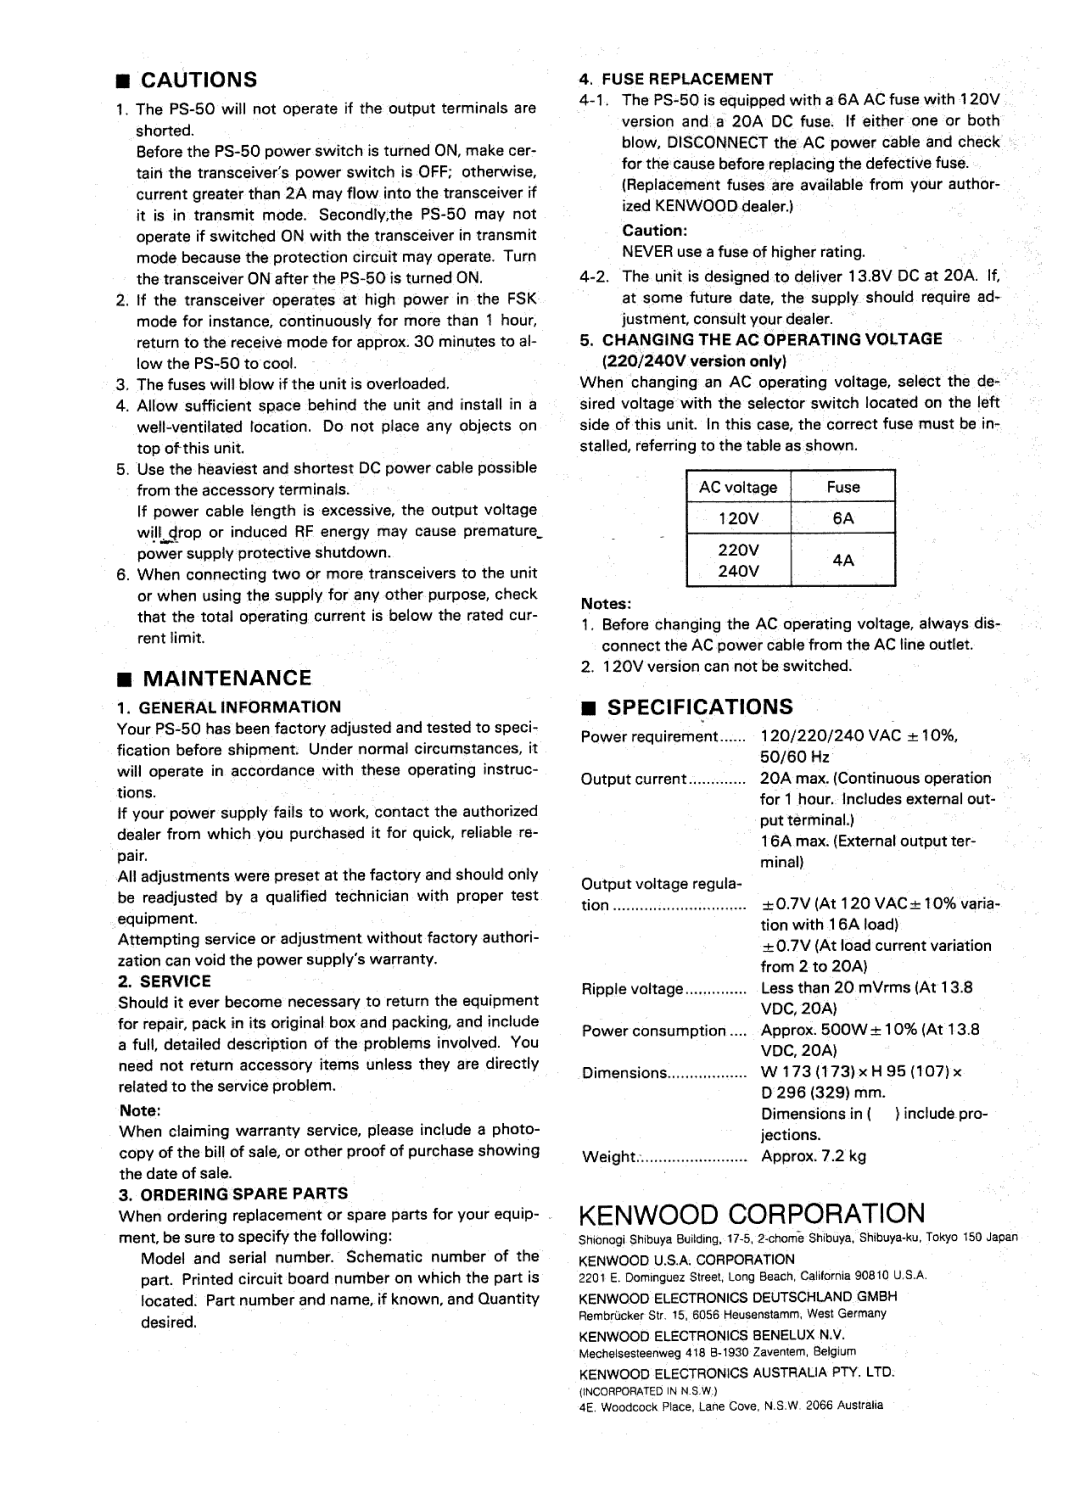 Kenwood PS-50 manual 